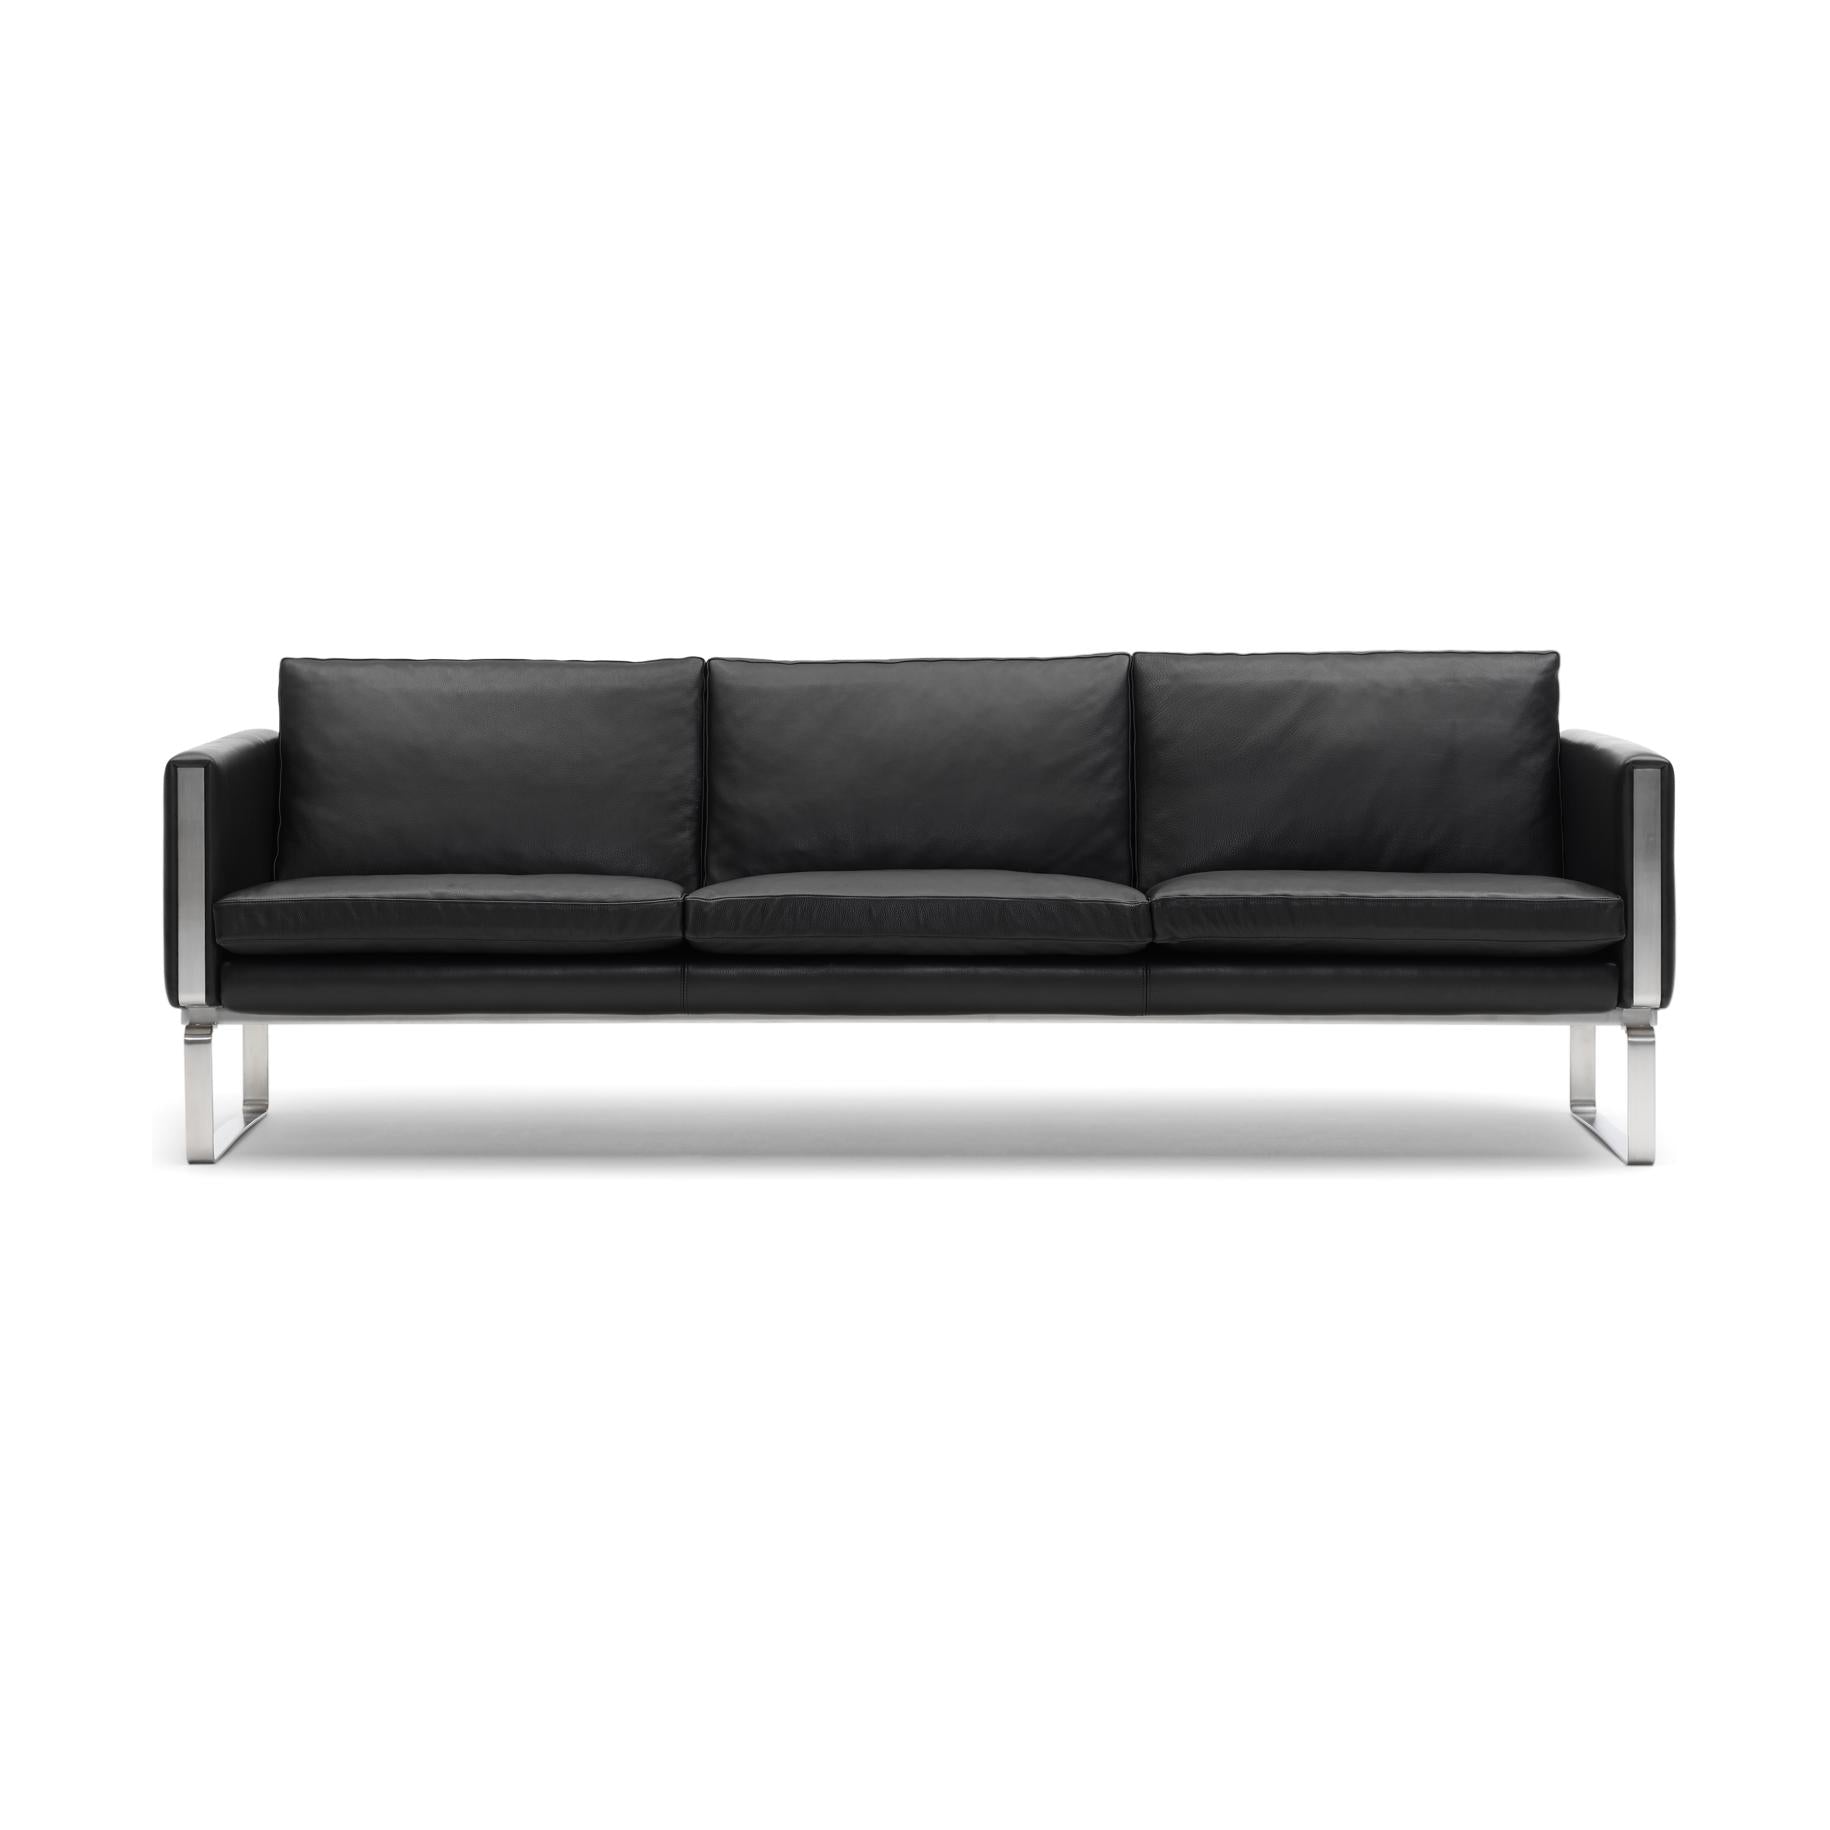 Carl Hansen CH103 divano, in acciaio/pelle nera